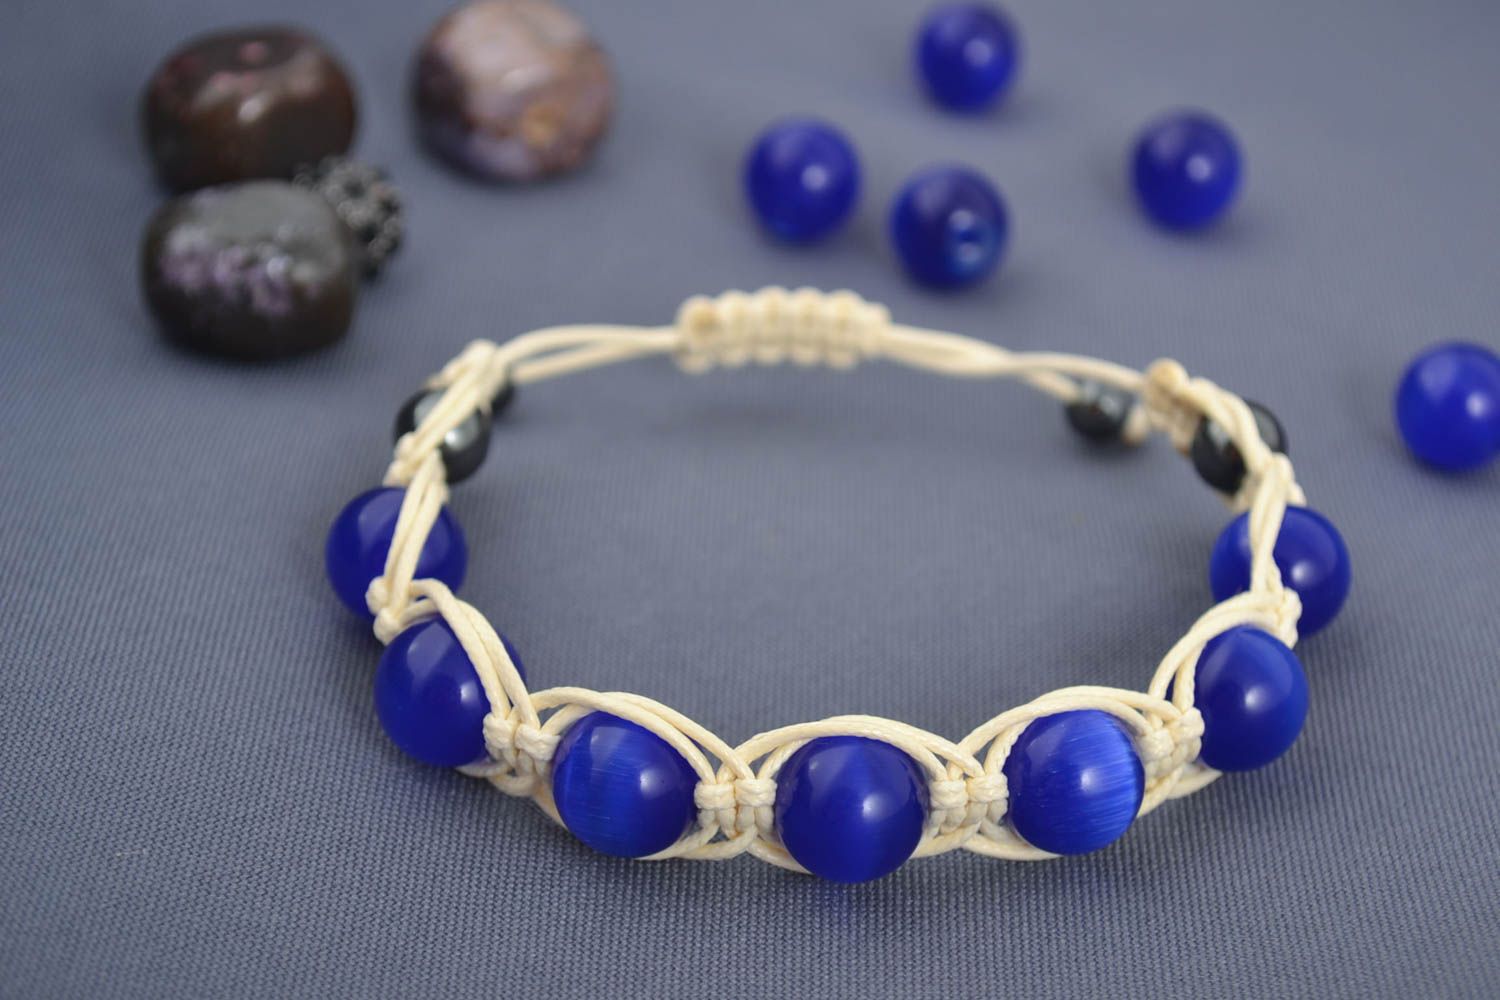 Stylish handmade wrist bracelet designs beaded gemstone bracelet gifts for her photo 1